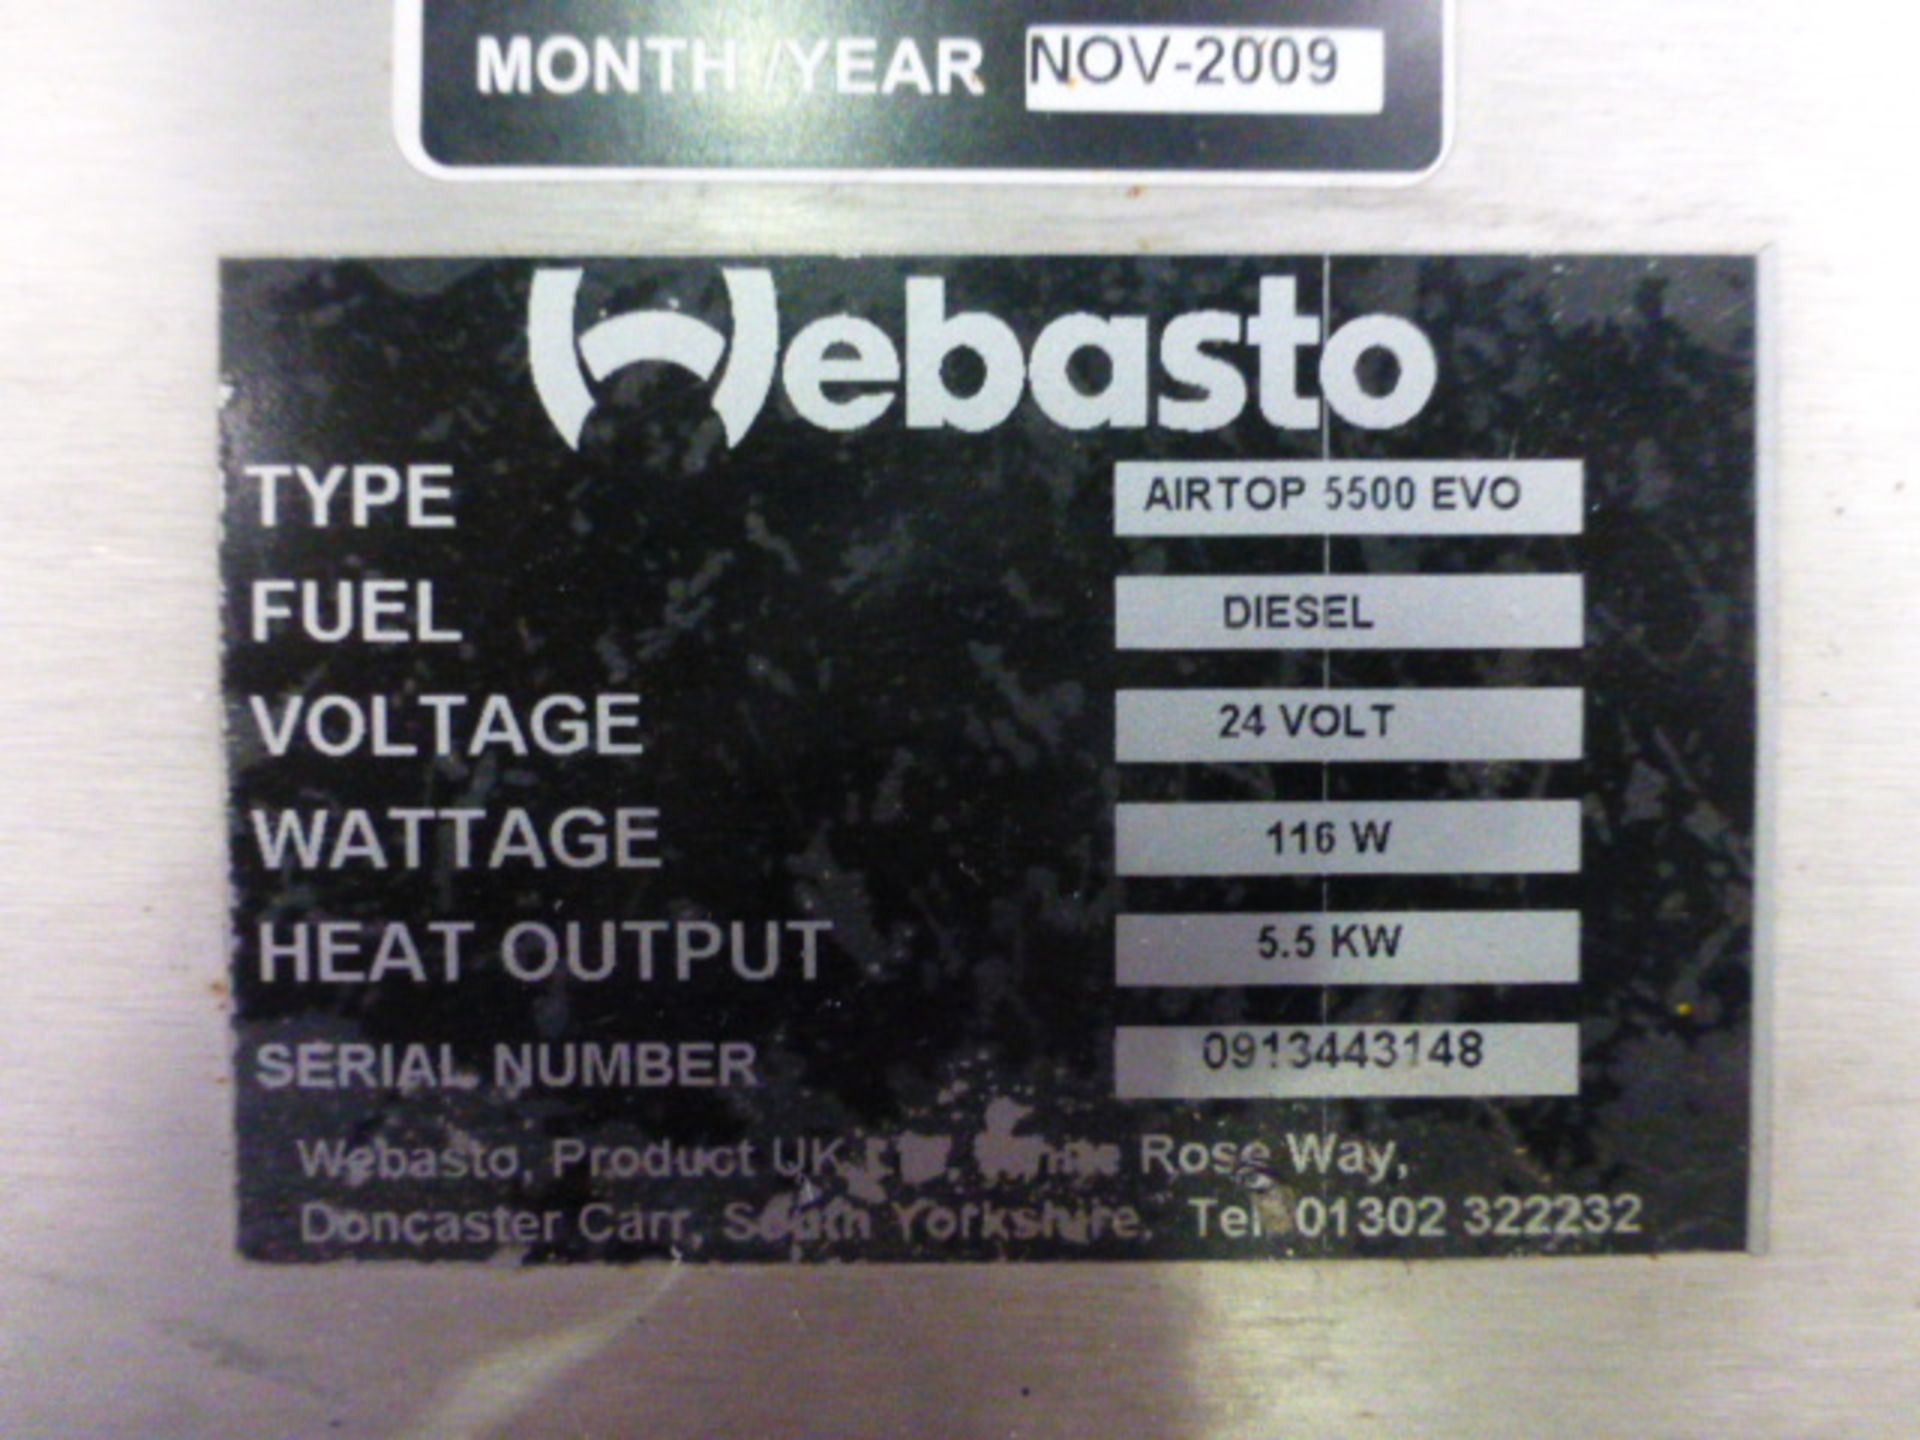 Takeout Webasto Airtop 5500 Evo Cab Heater - Image 5 of 6